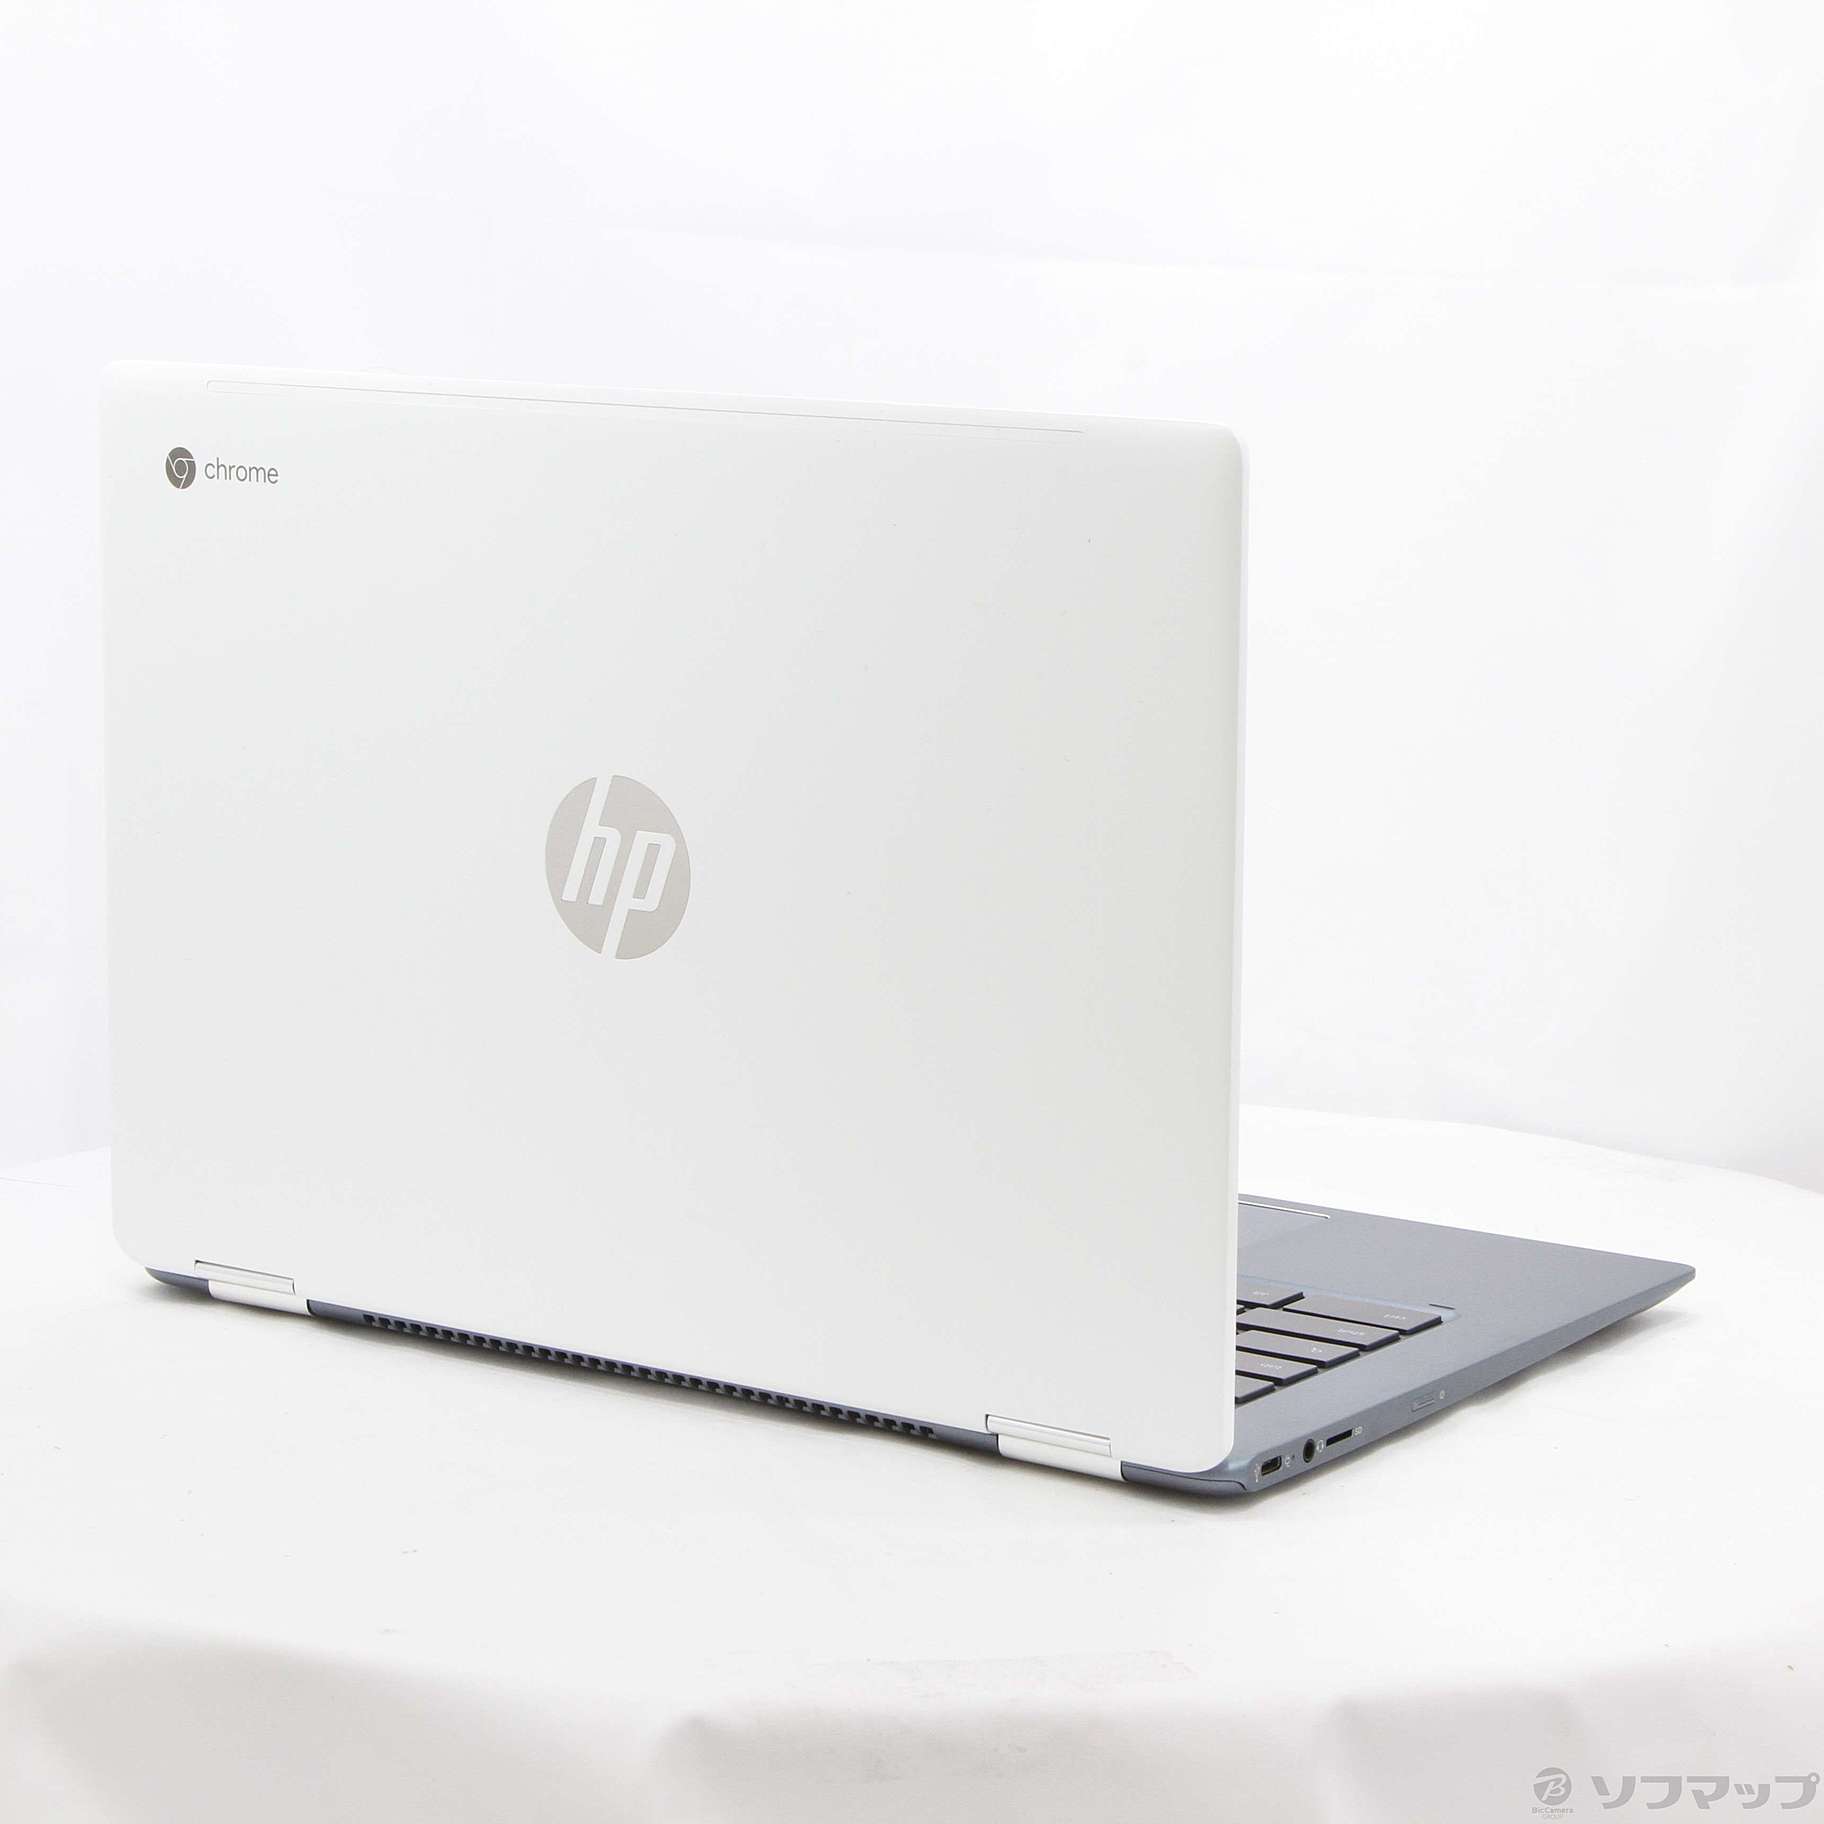 HP Chromebook x360 14-da0002TU Core i5 stomaservice.uz